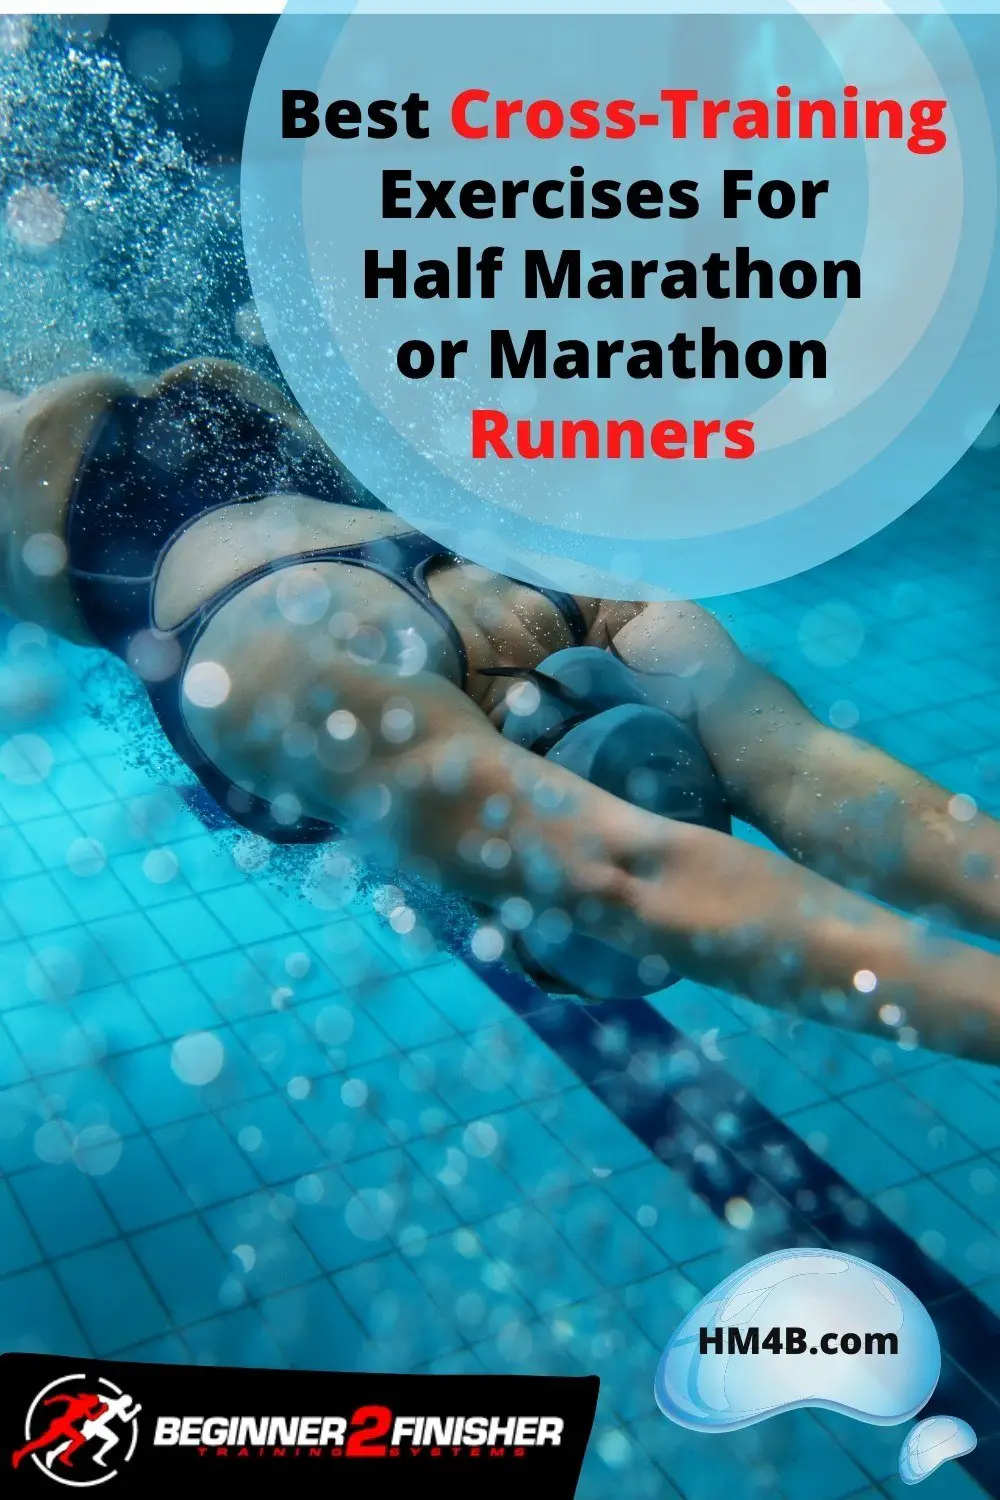 Best Cross-Training Exercises For Half Marathon or Marathon Runners